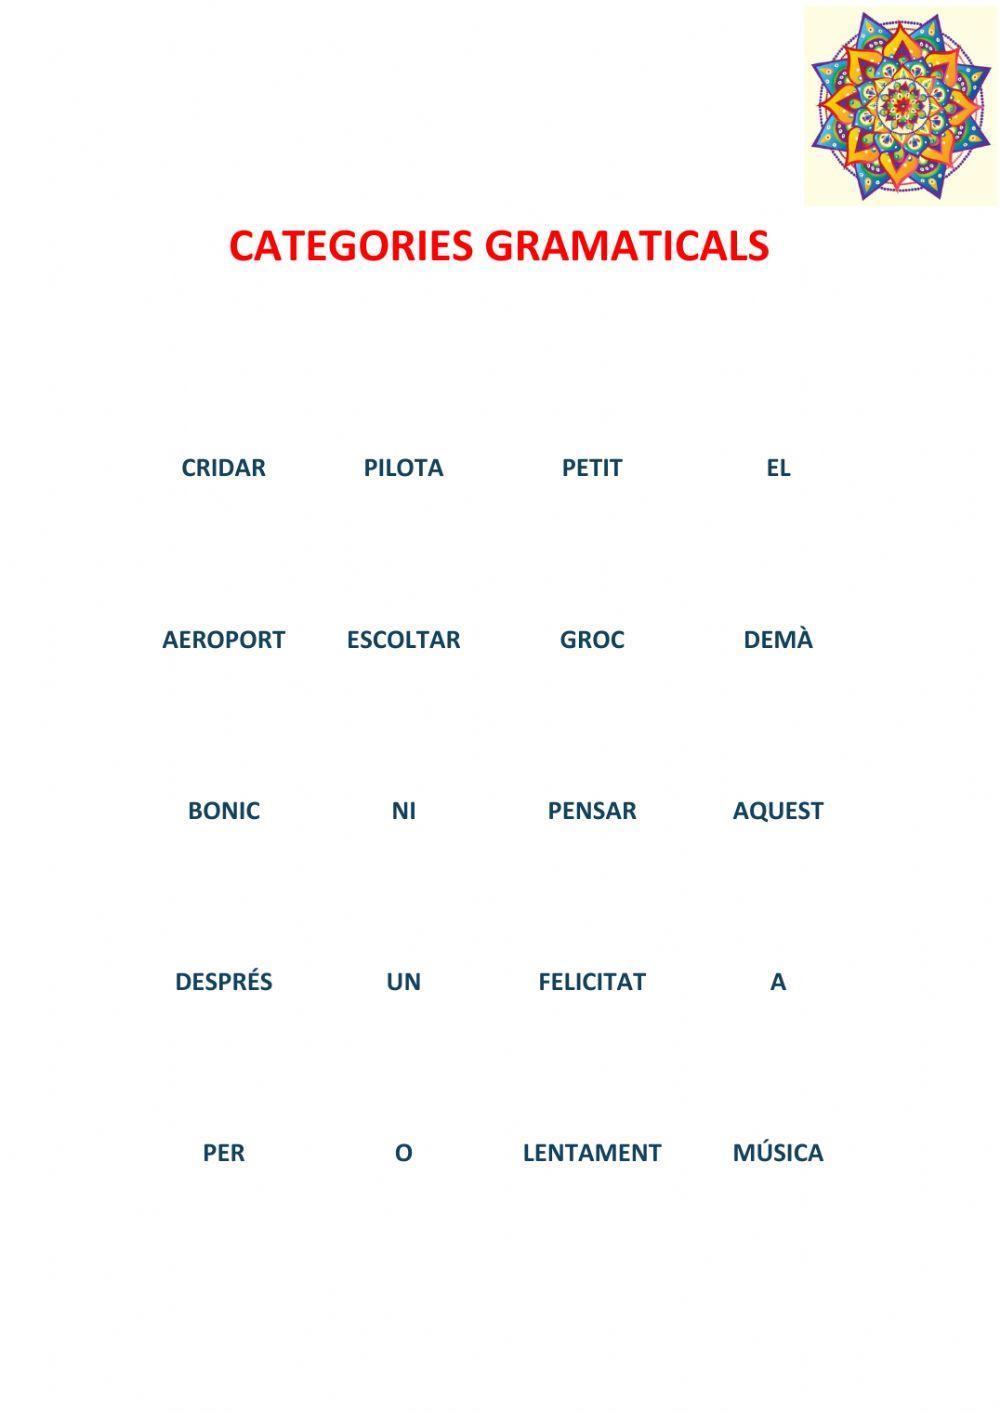 Categories Gramaticals